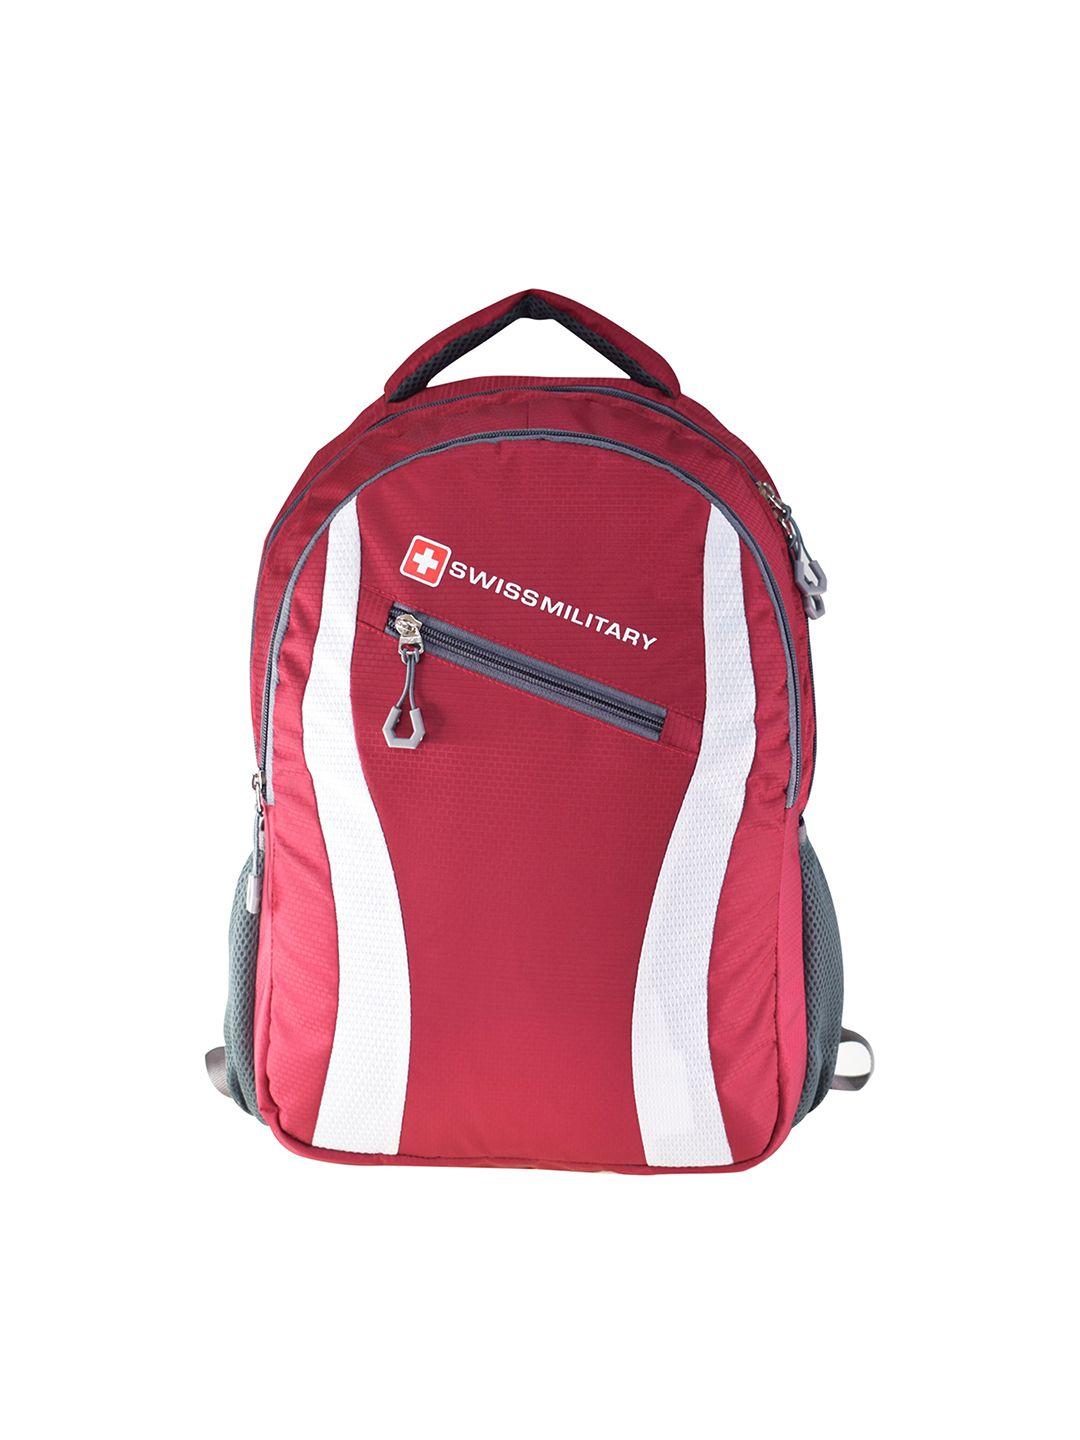 swiss military unisex red & white brand logo laptop backpack